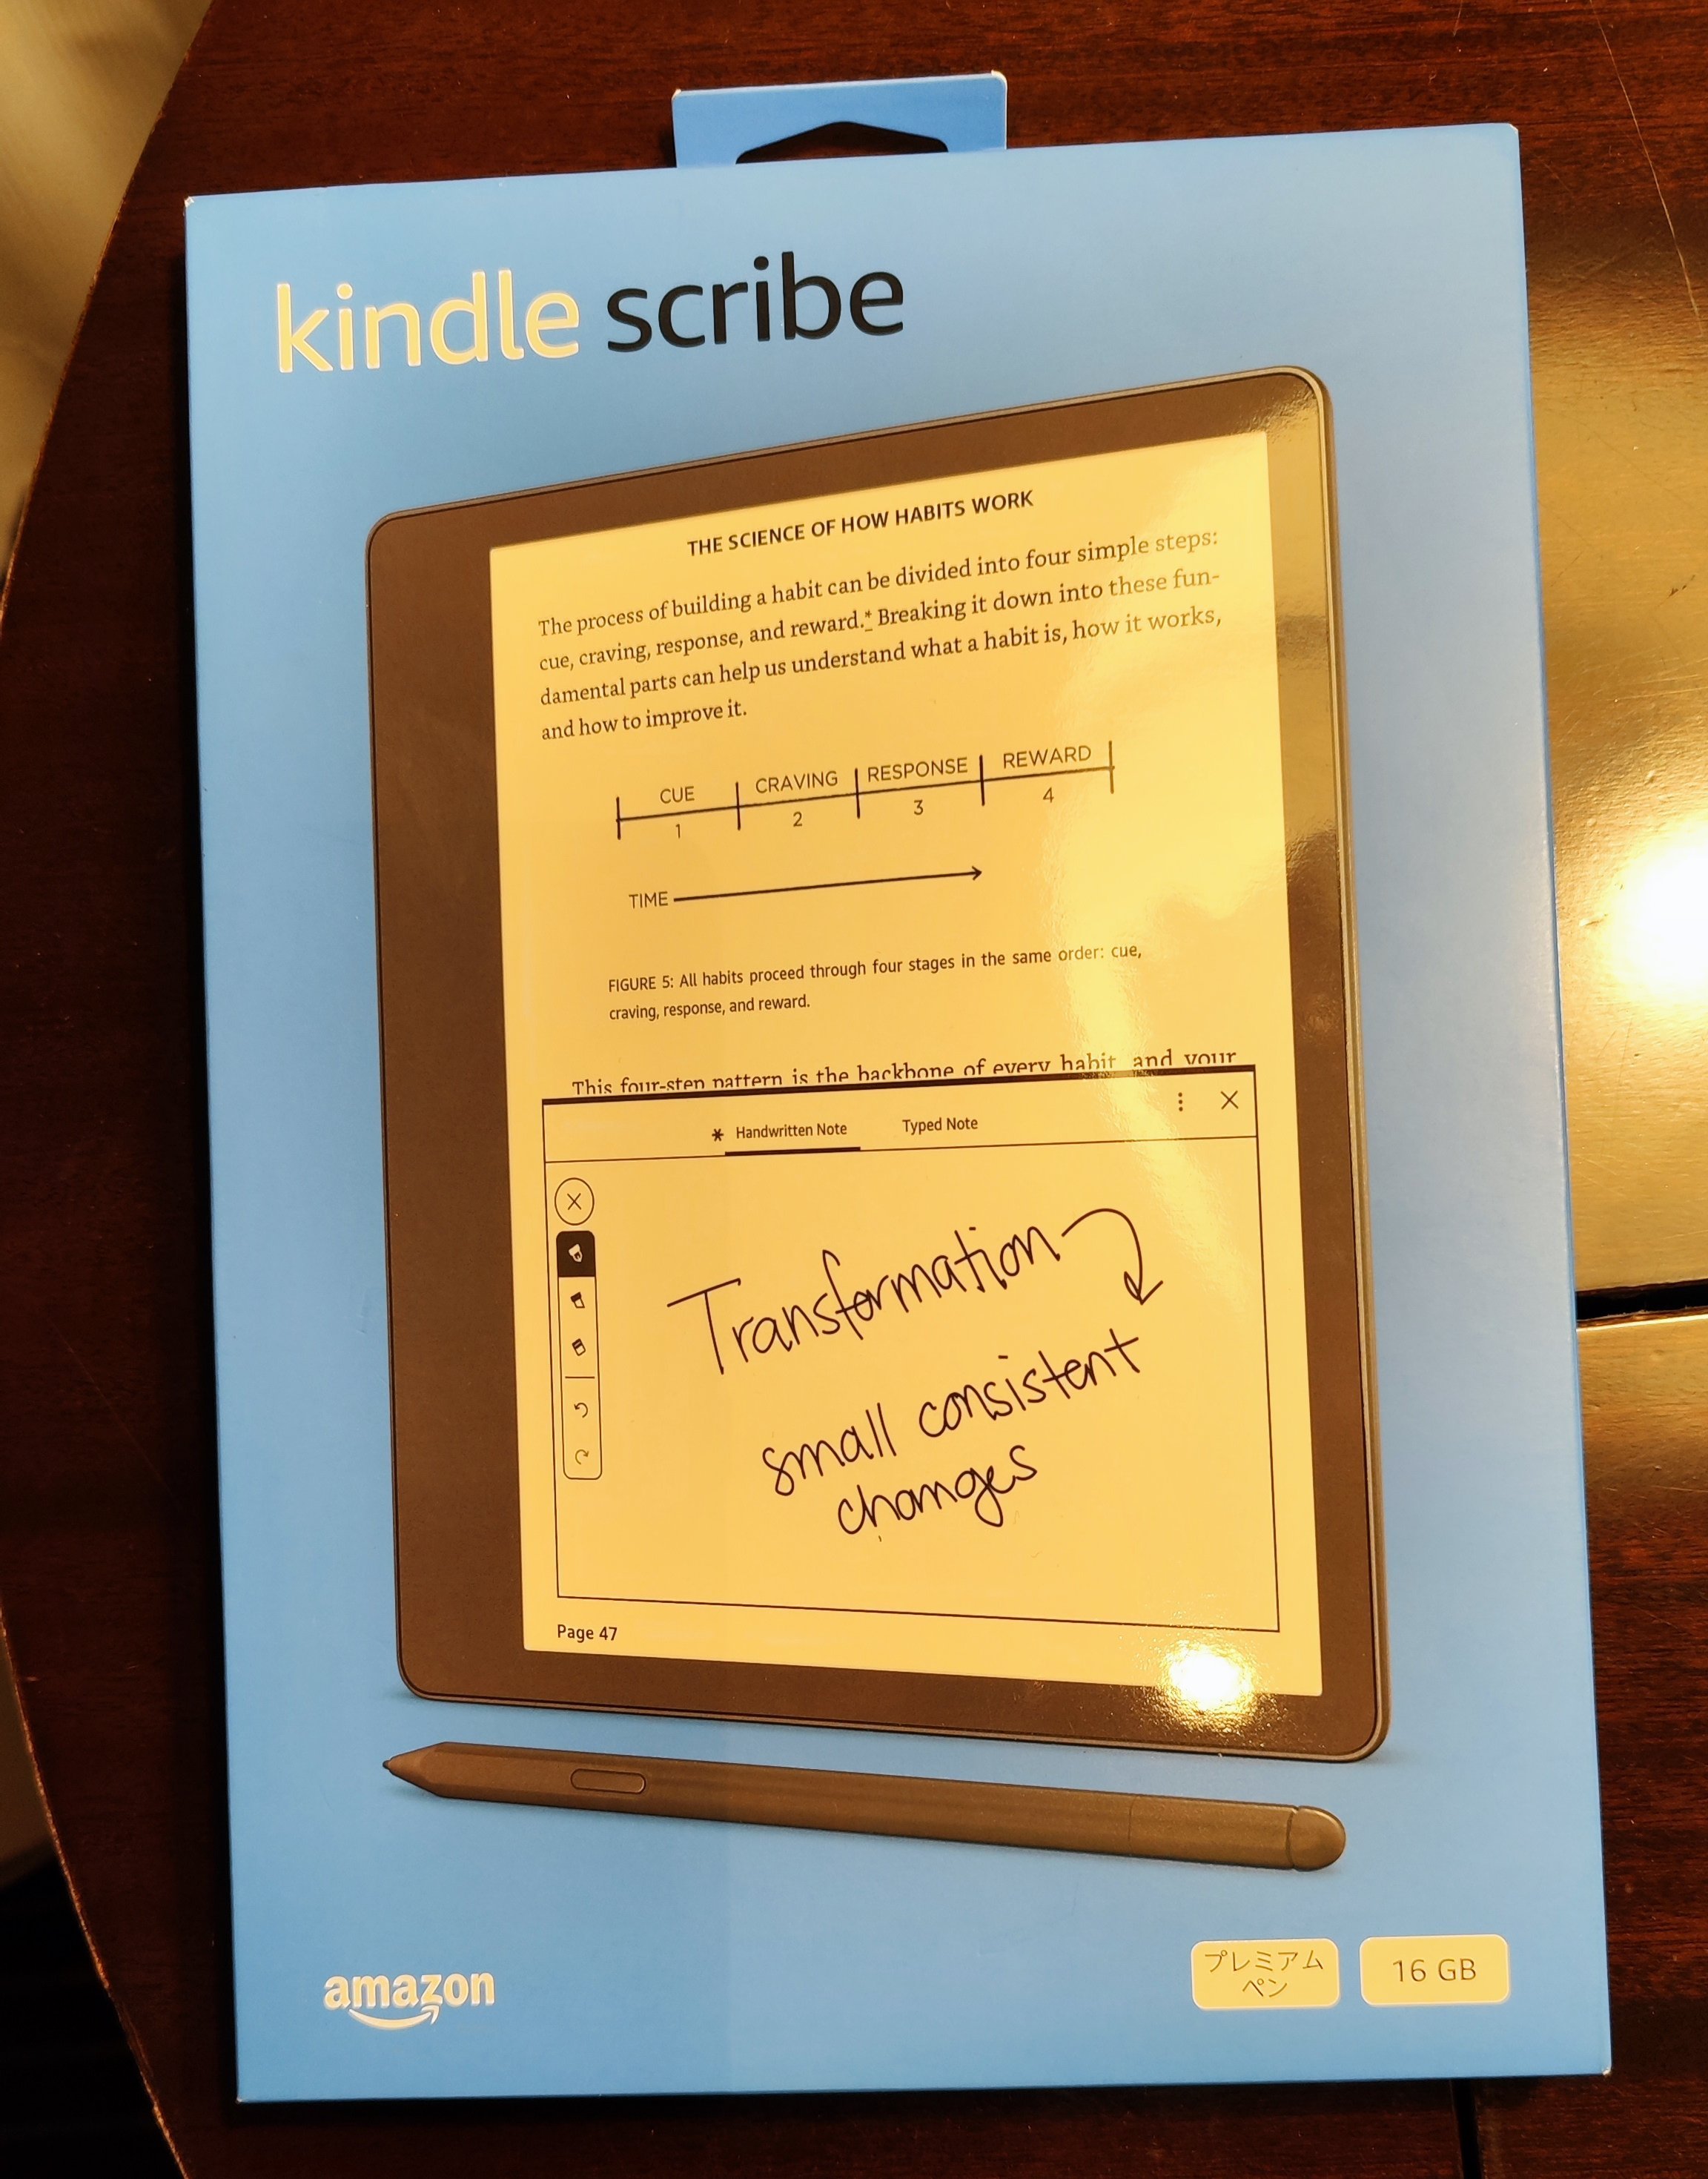 alt="Kindle Scribe Box"